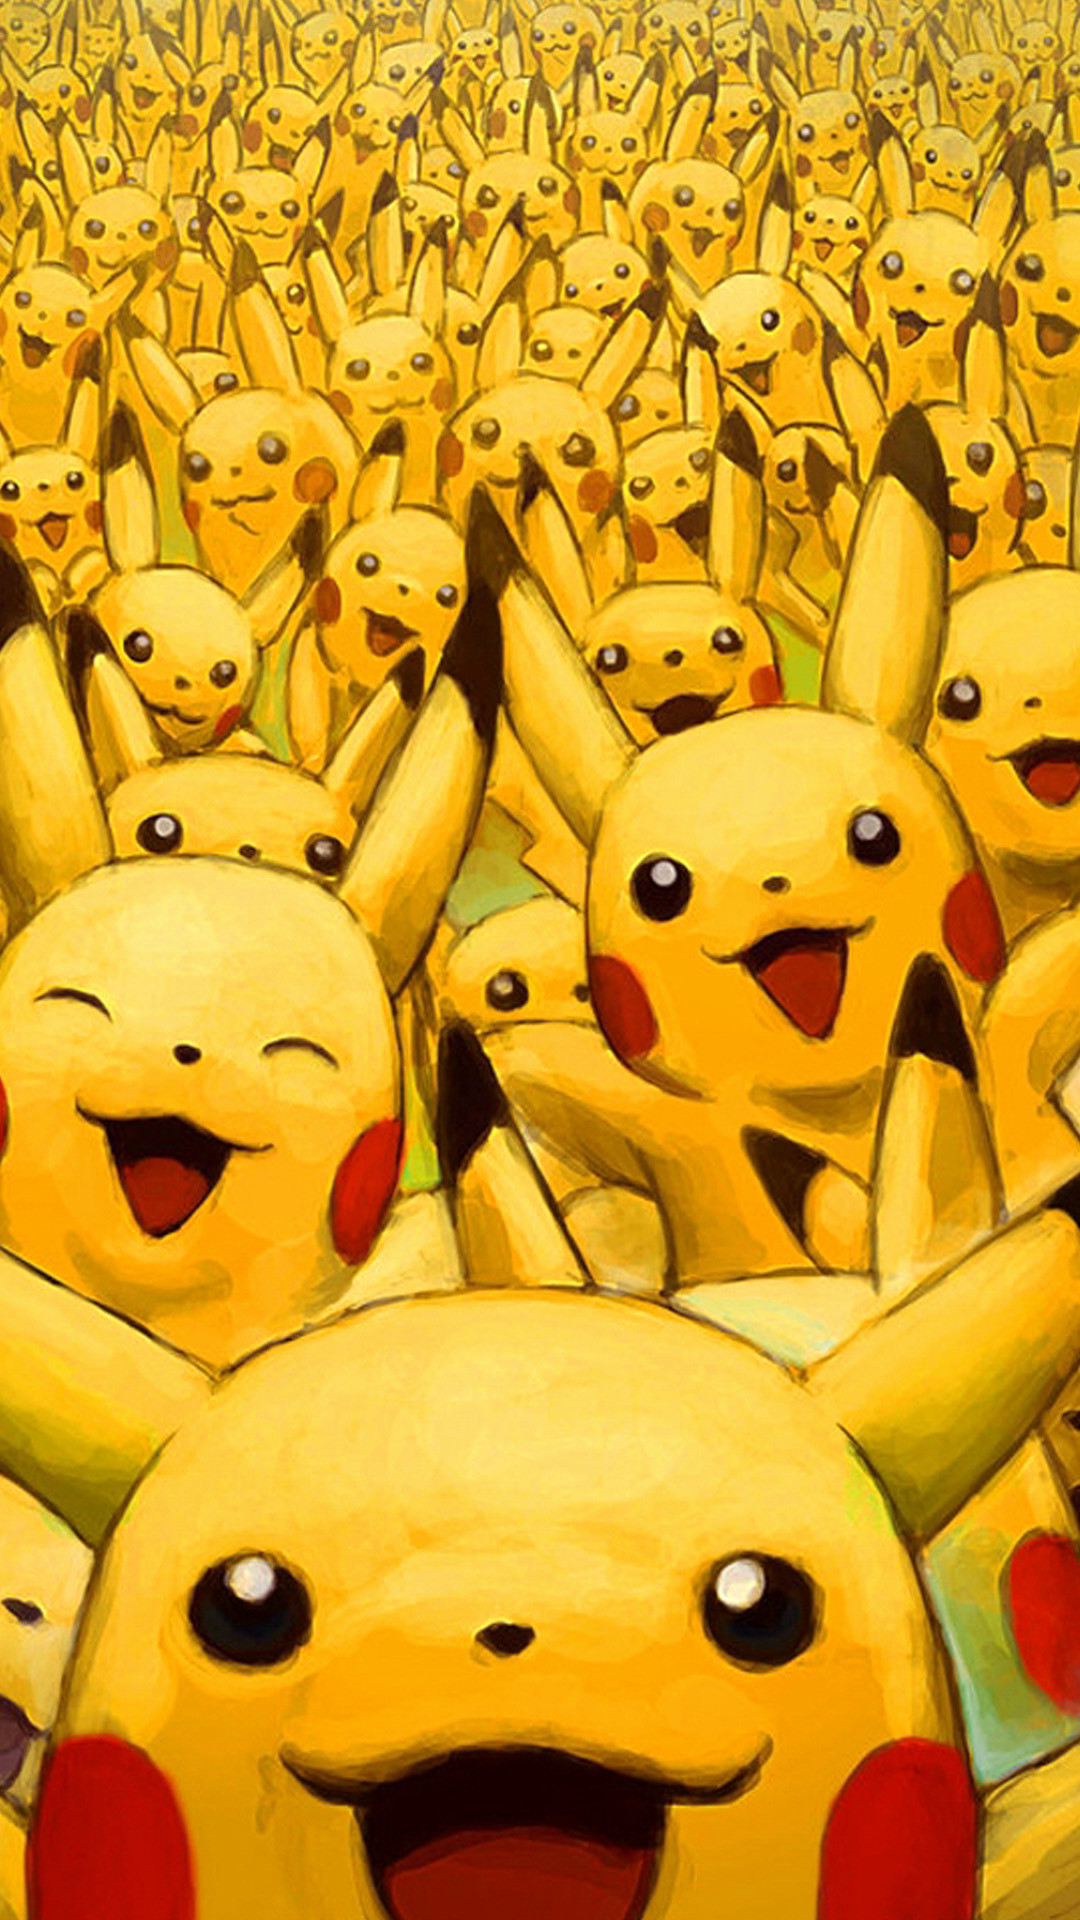 1080x1920, Pikachu Wallpaper Unique Pikachu Iphone - Pokemon Wallpaper Iphone 4 - HD Wallpaper 